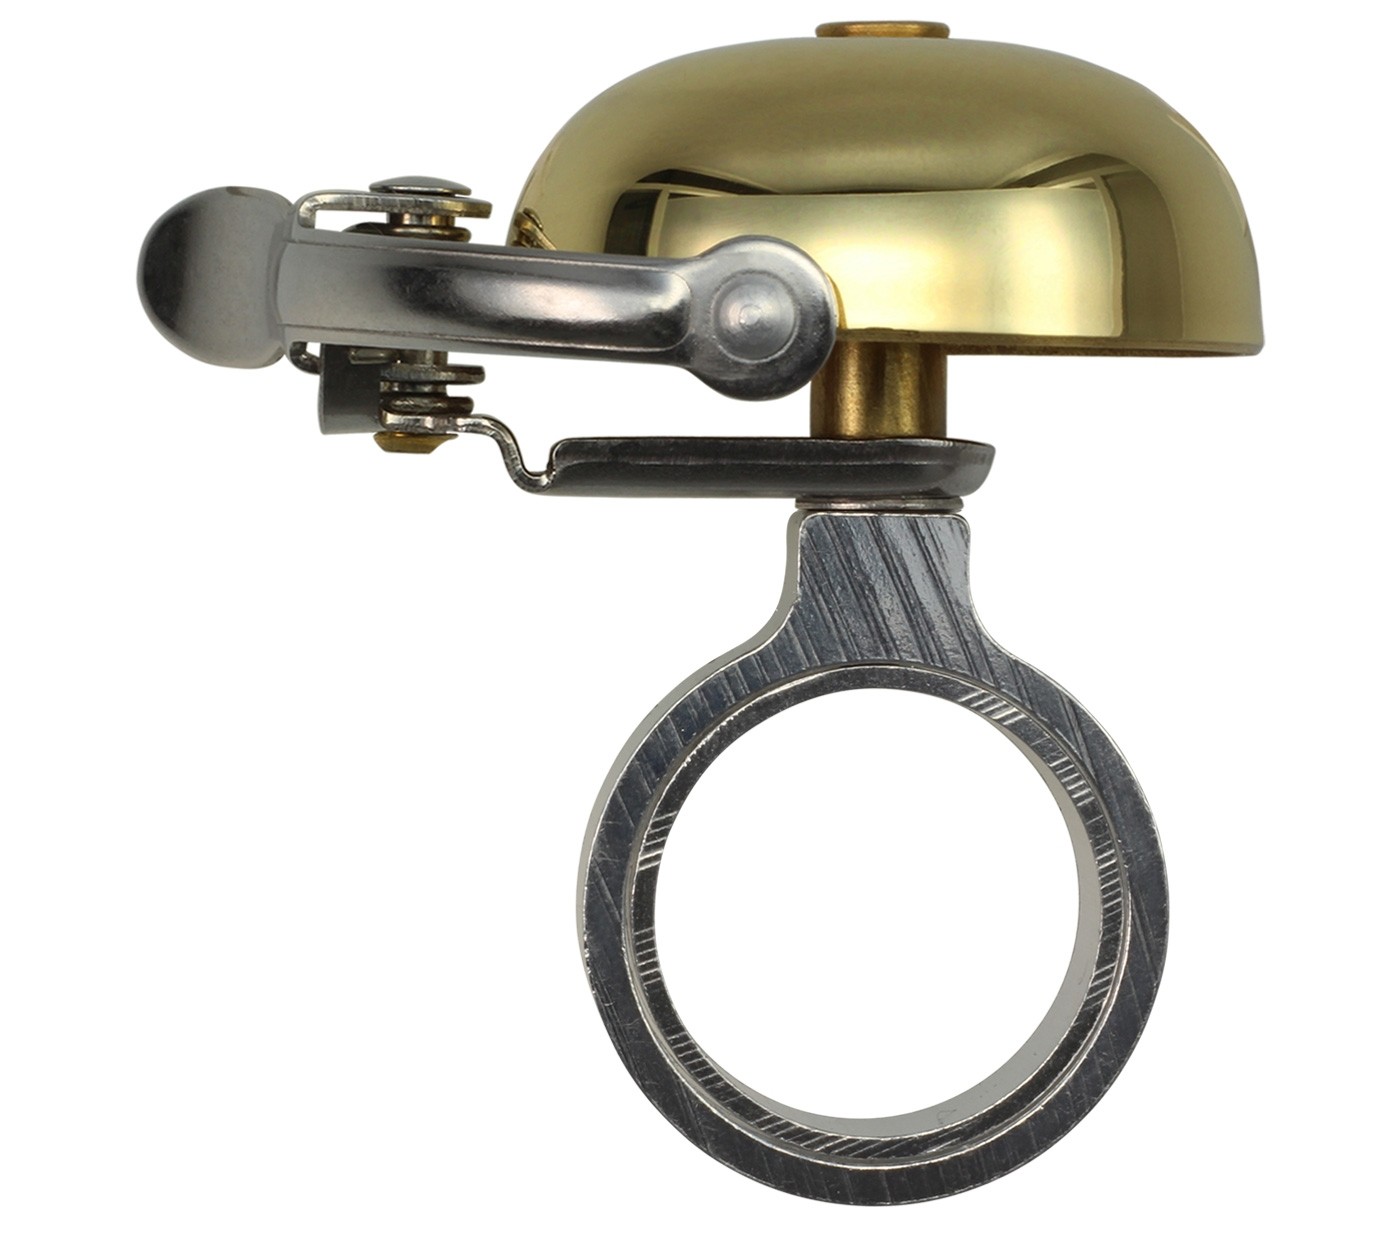 Crane Bell Co. Suzu Mini Klingel Glocke Retro gold messing Headset Spacer